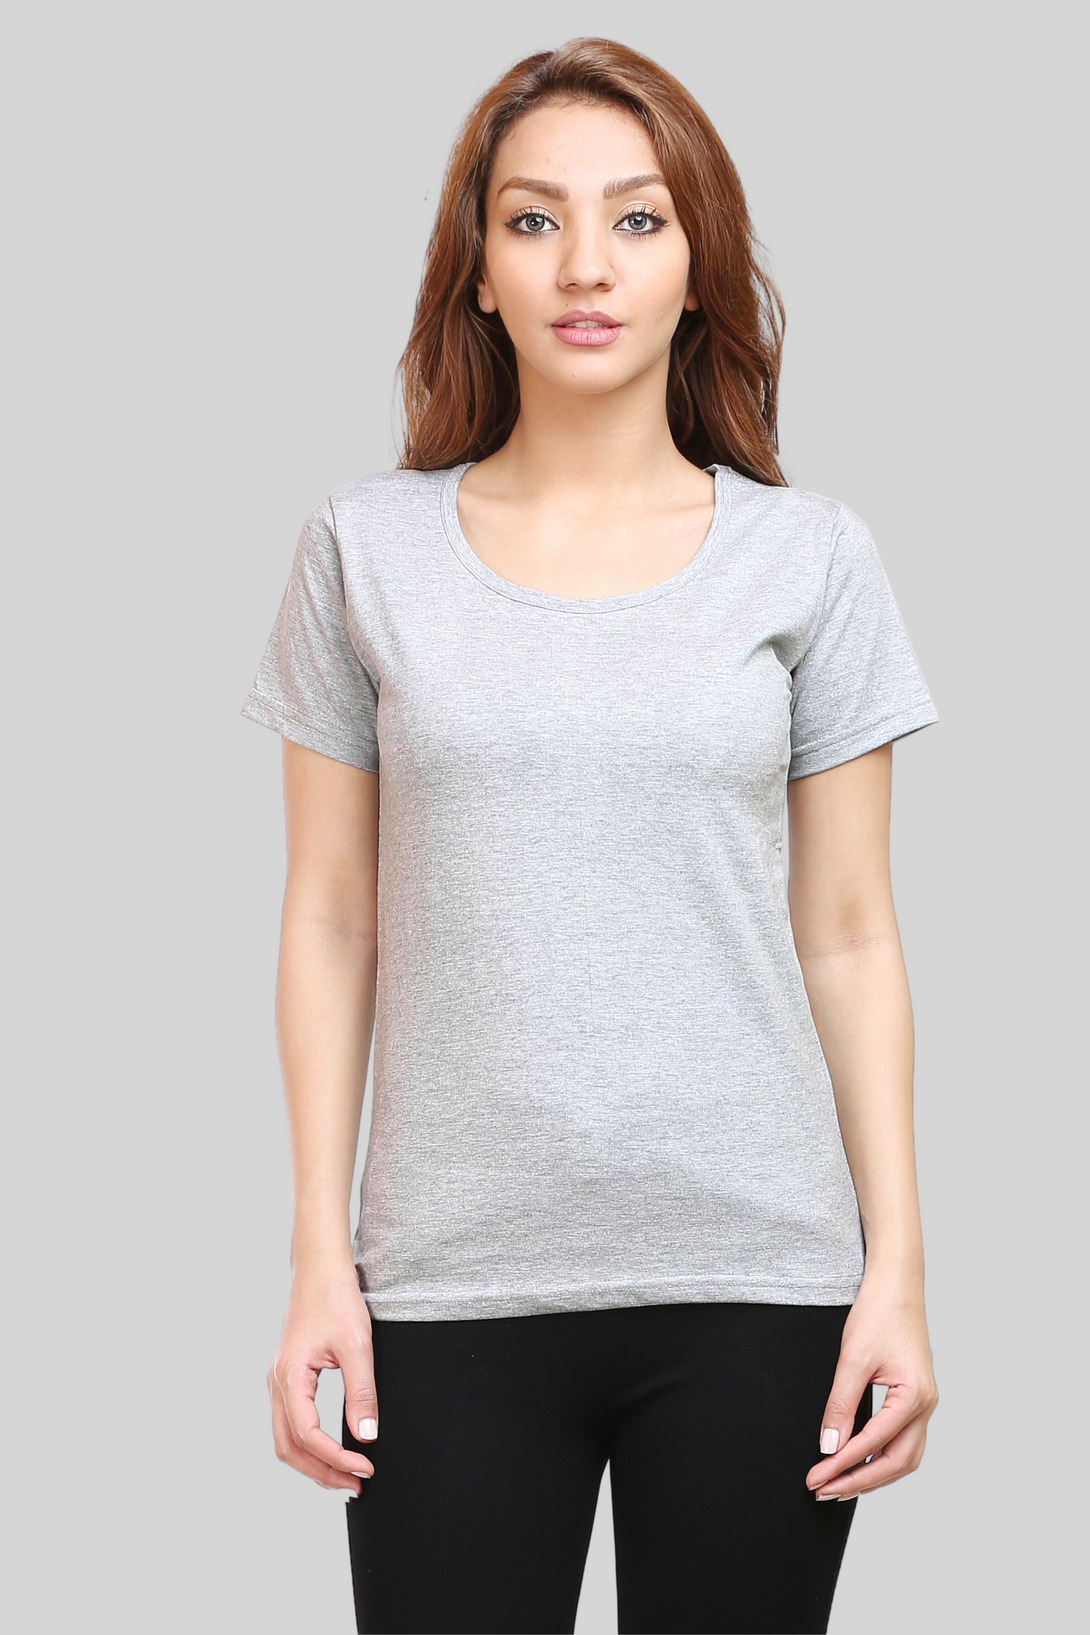 Grey Melange Scoop Neck T-Shirt For Women - WowWaves - 4